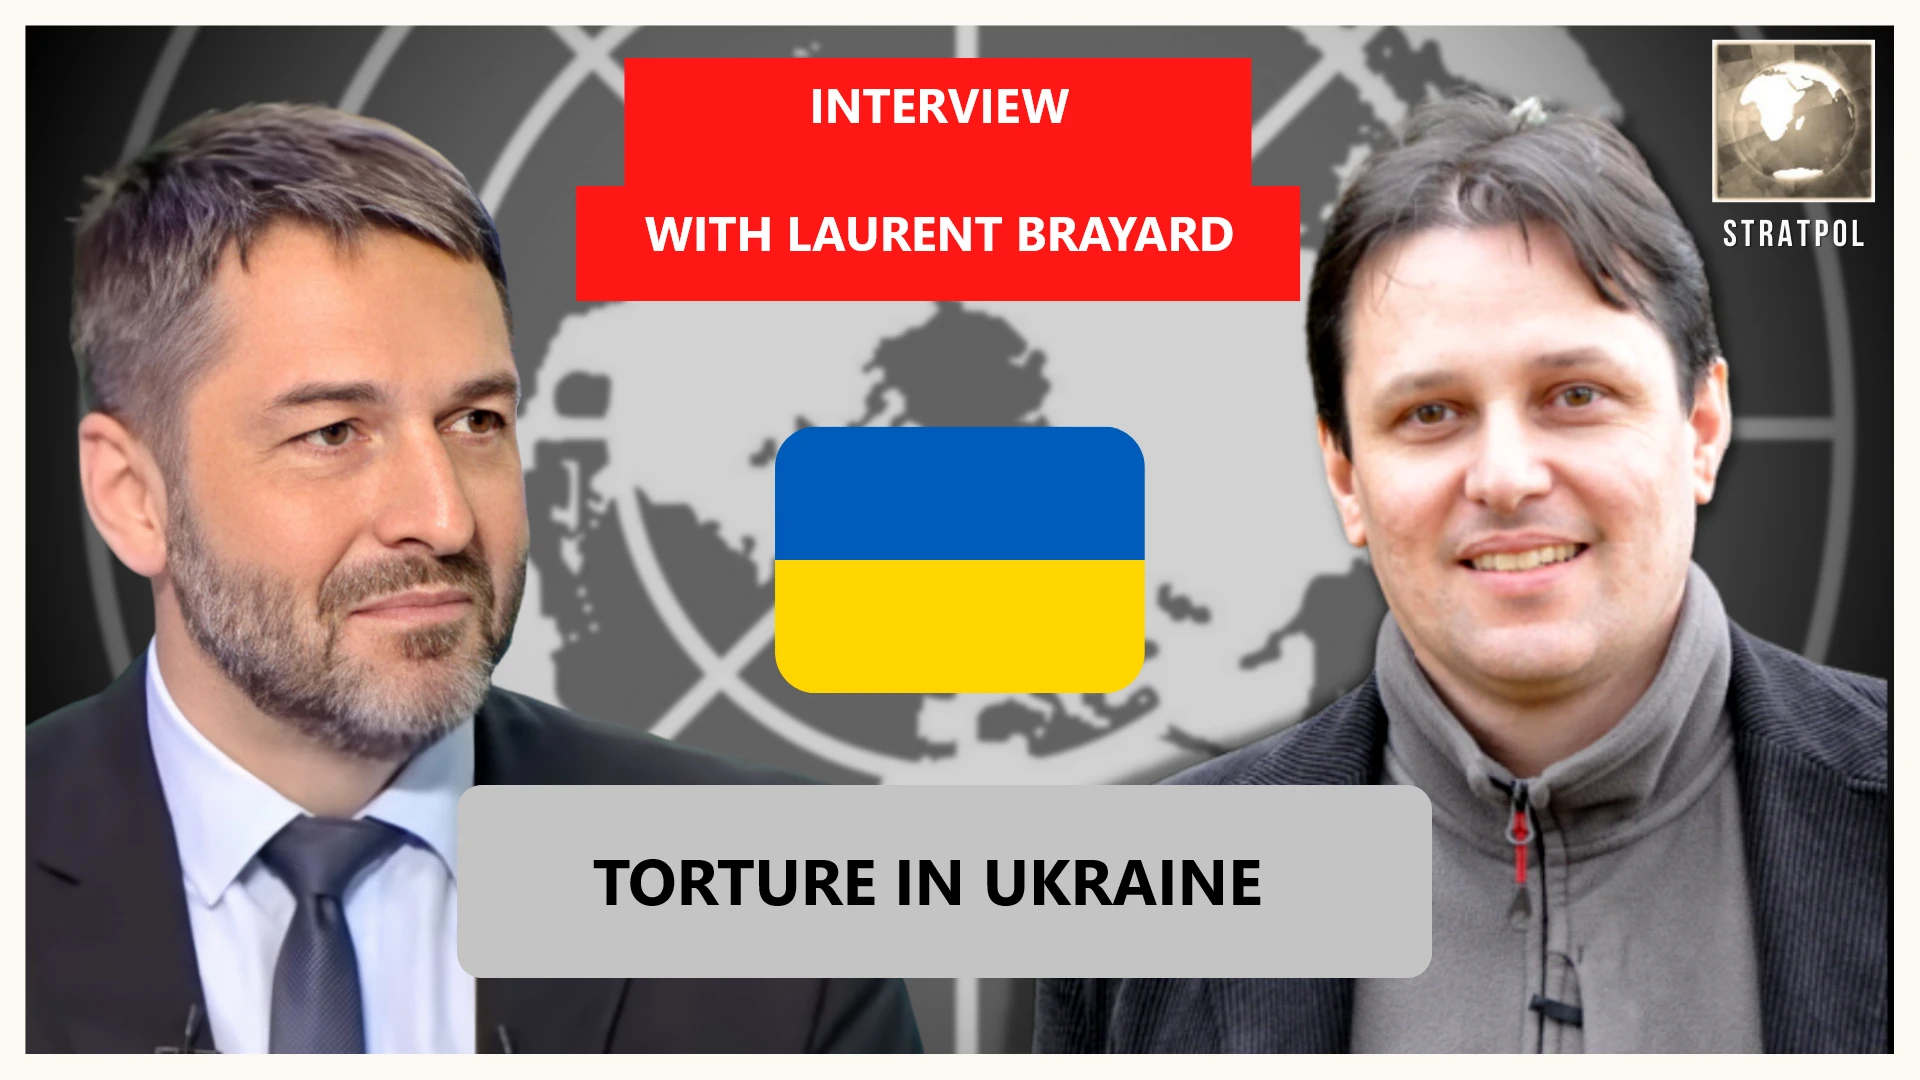 TORTURE IN UKRAINE: INTERVIEW WITH LAURENT BRAYARD